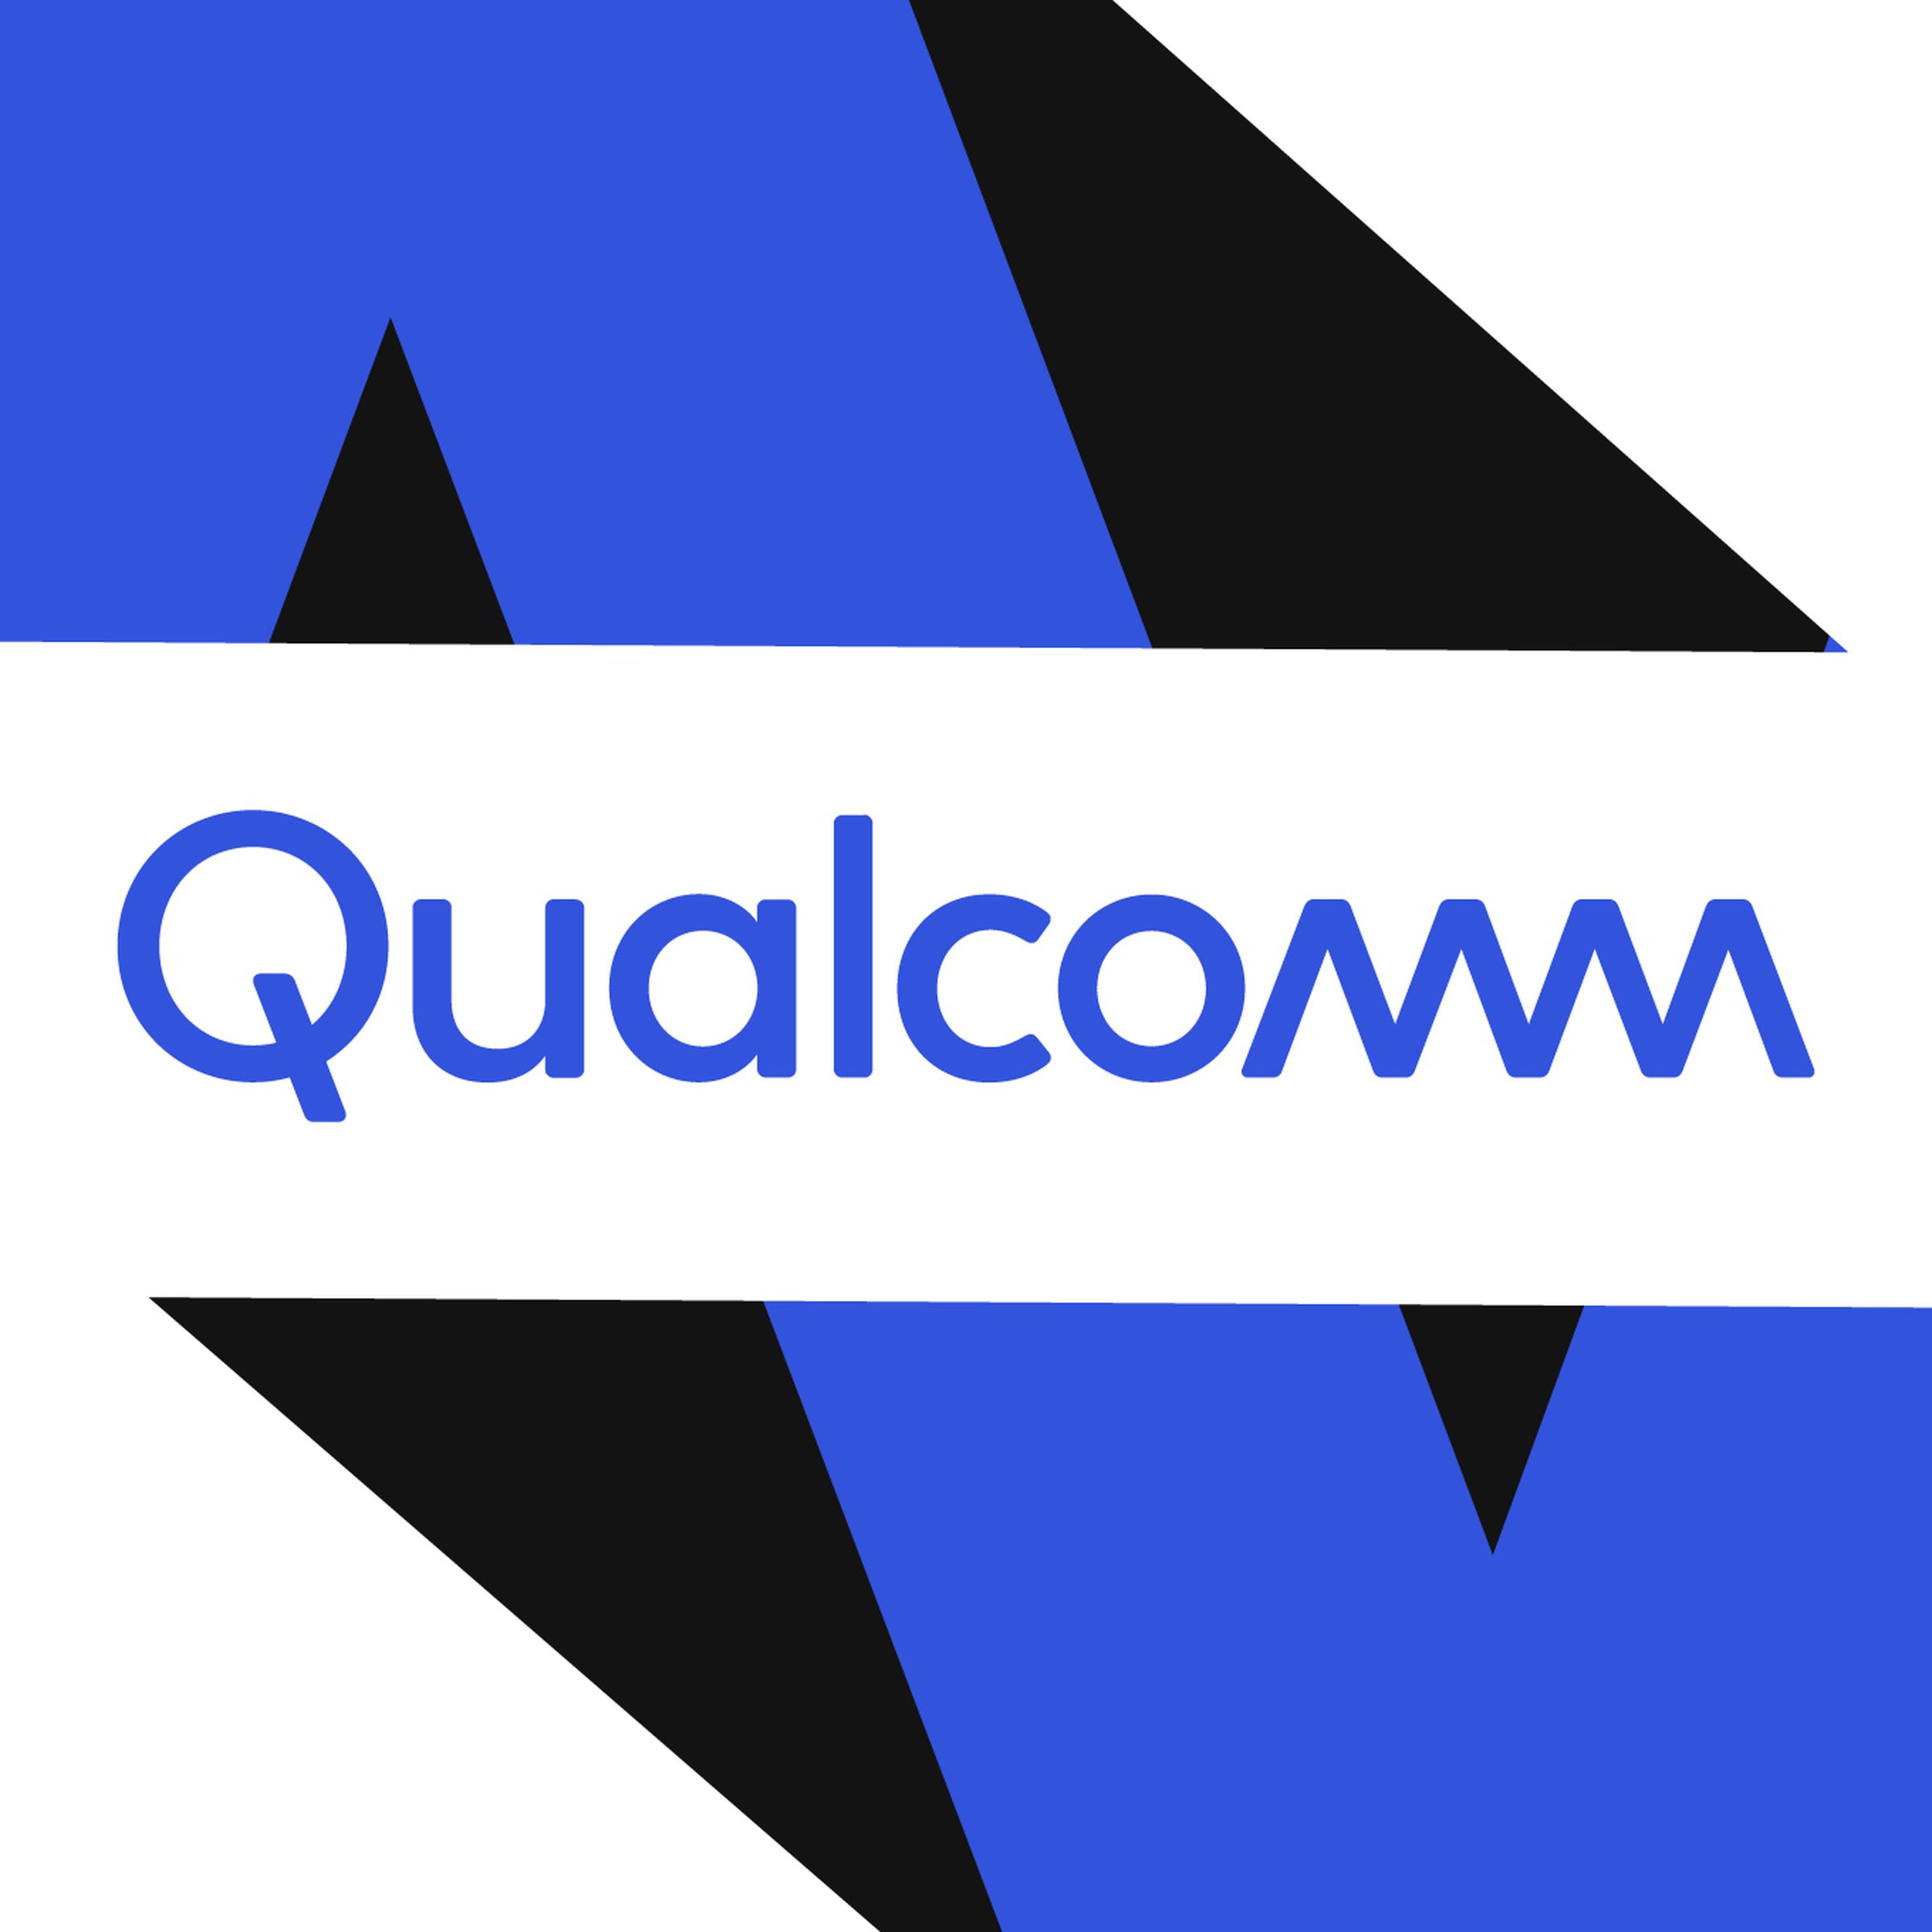 An illustration of the Qualcomm logo.